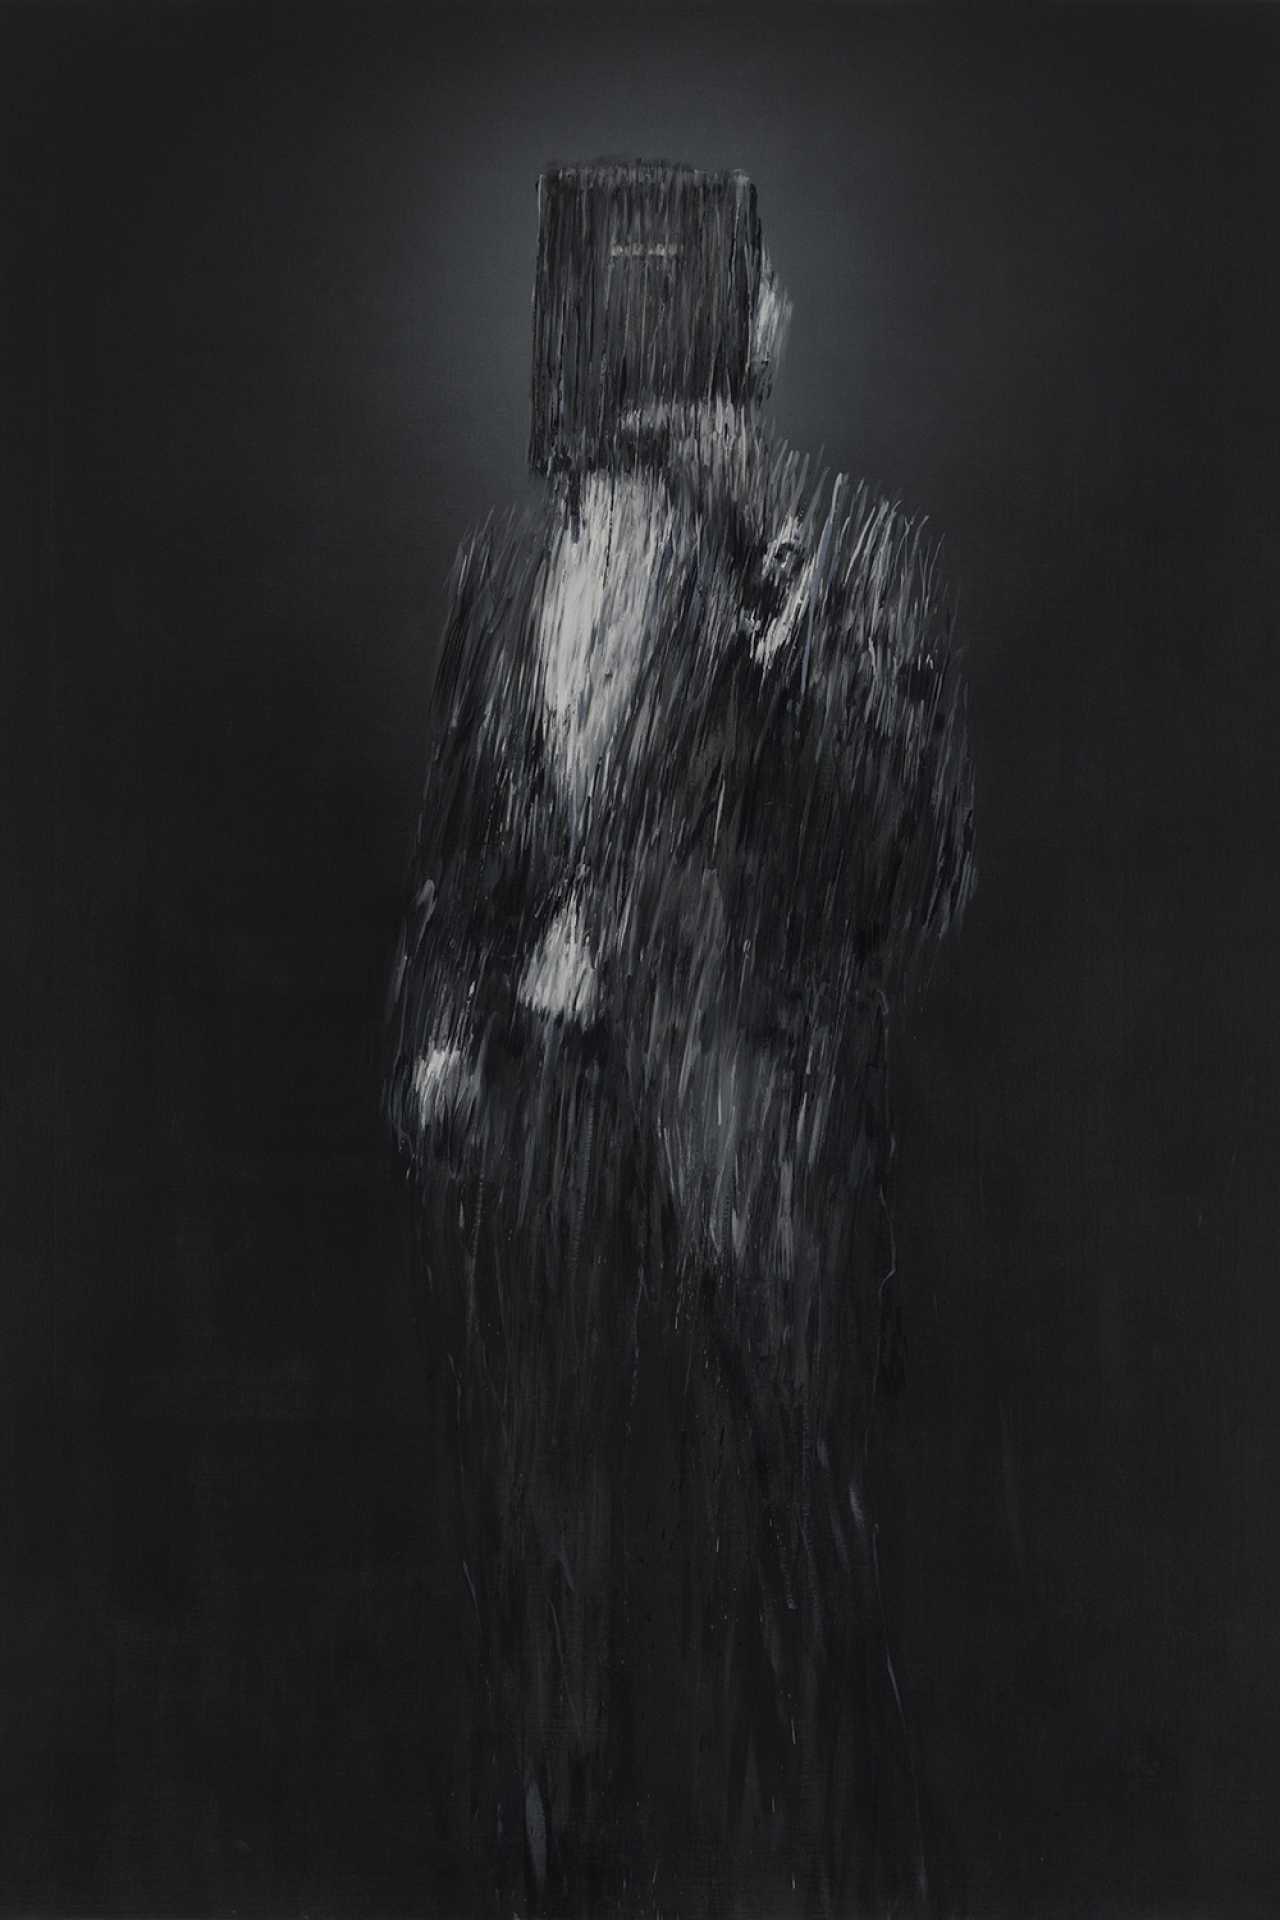 Portrait of Emmanuel (or Man Standing Behind his Self-Belief), 2019, by Charming Baker